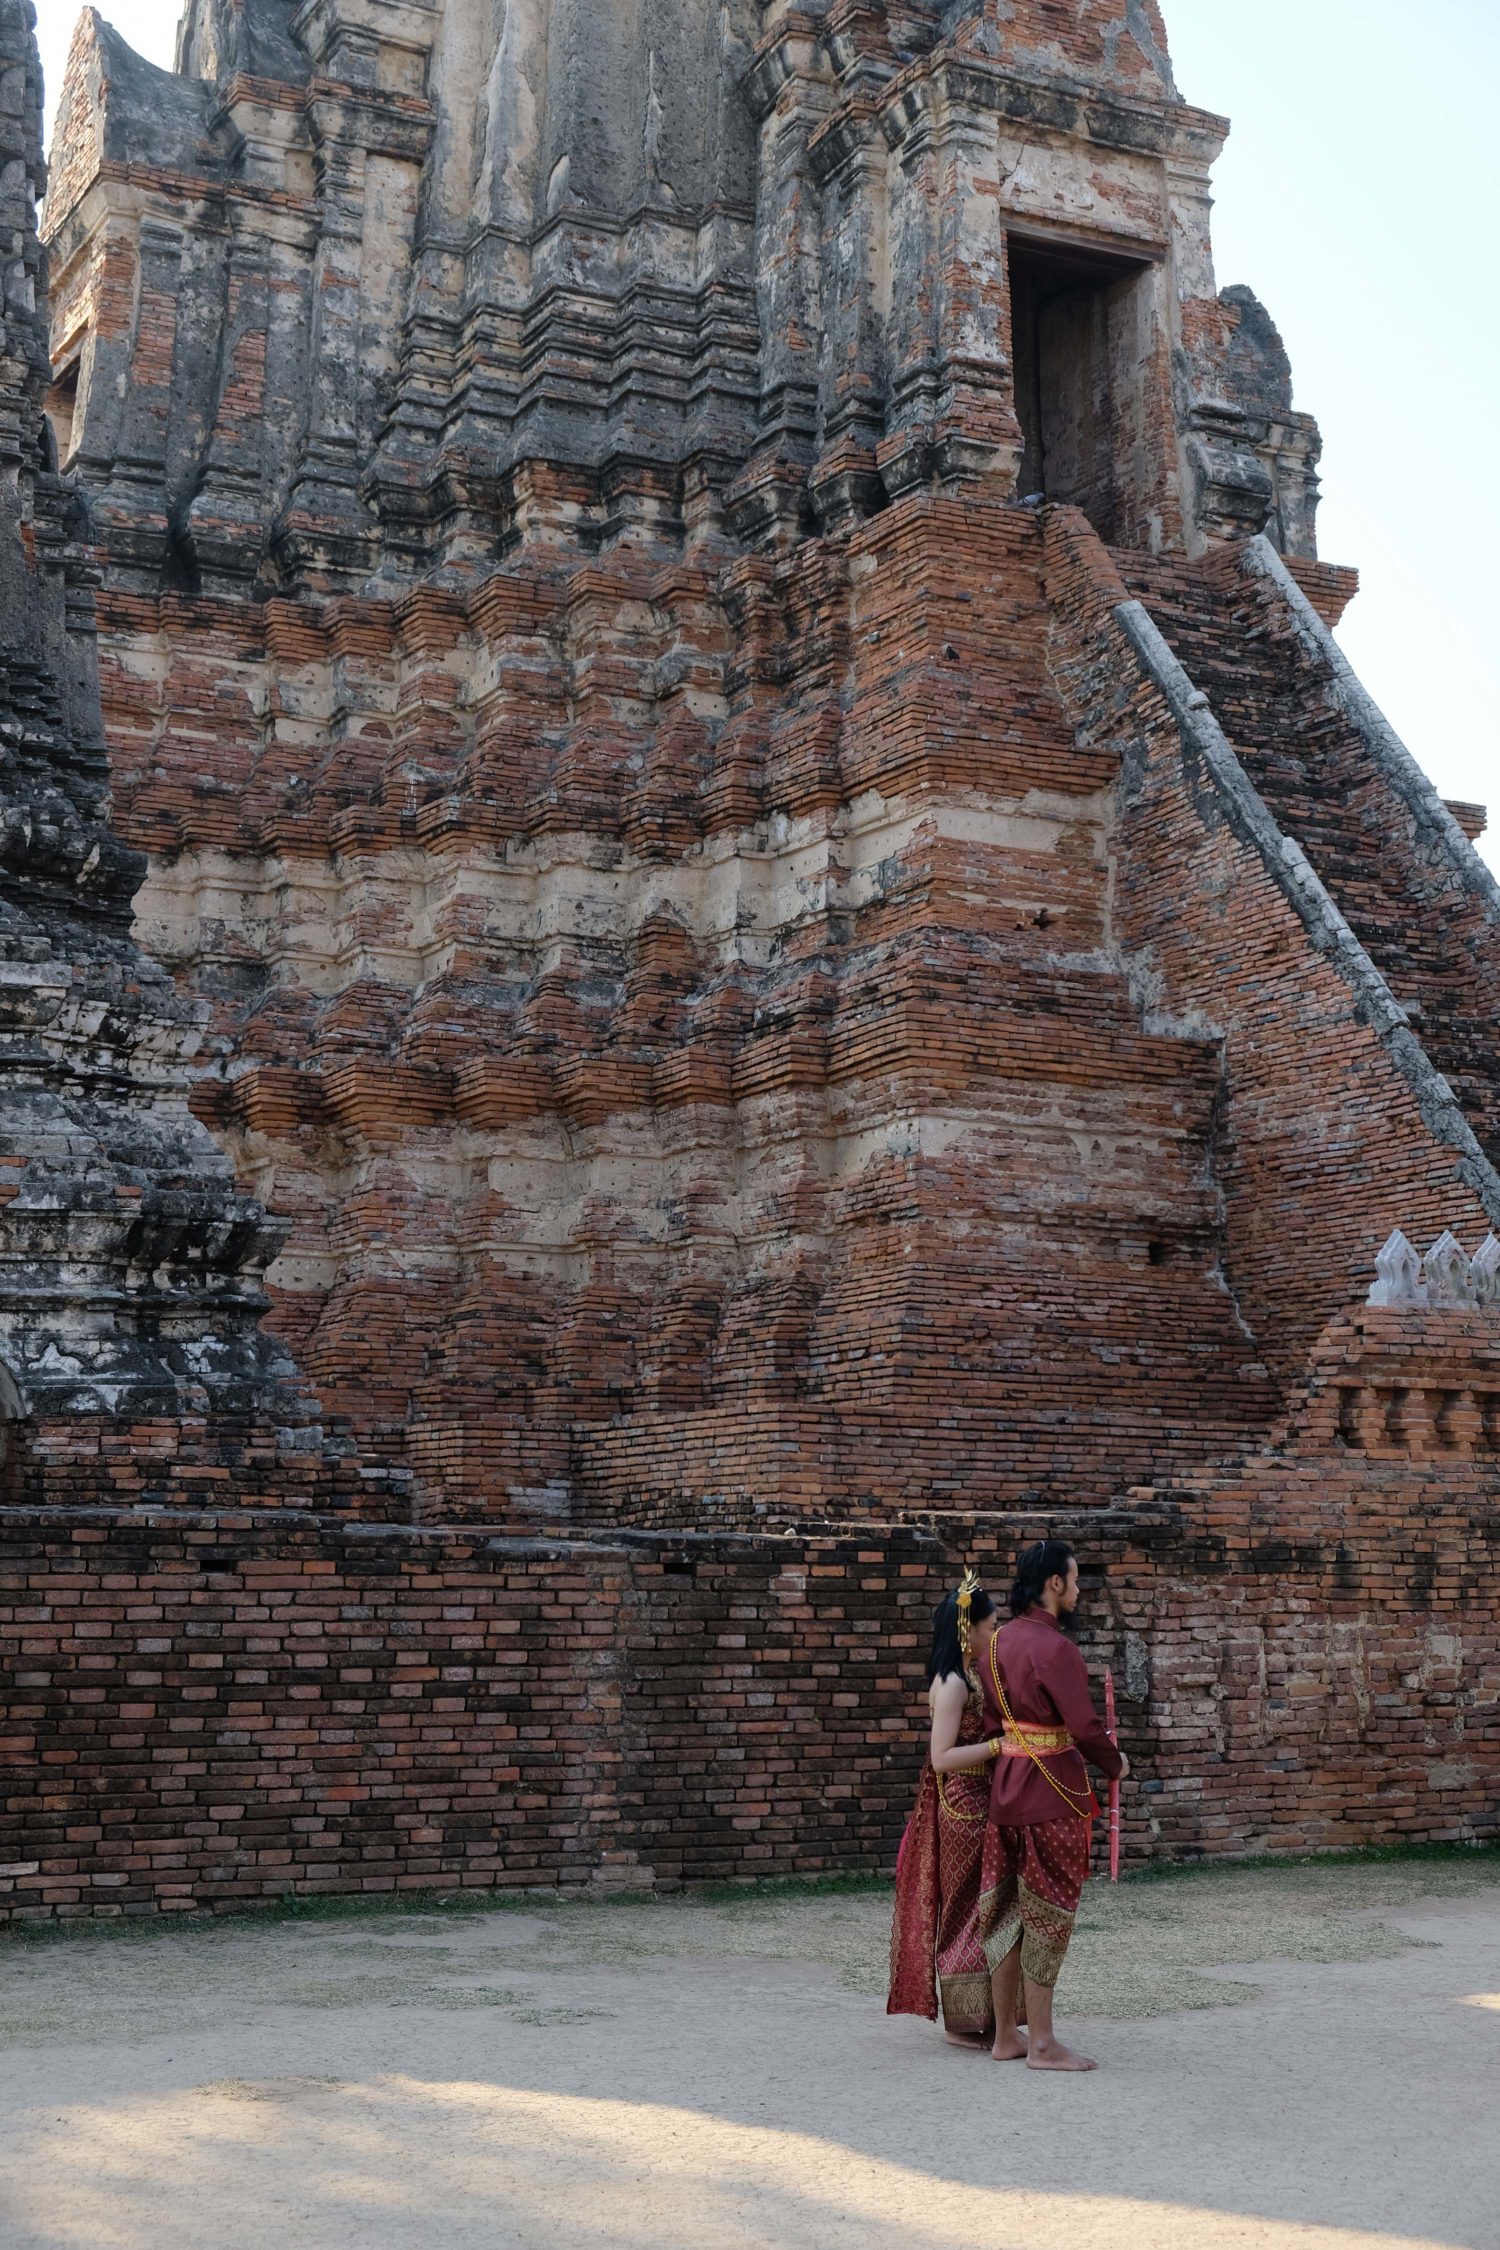 Wat Chaiwatthanaram Ayutthaya